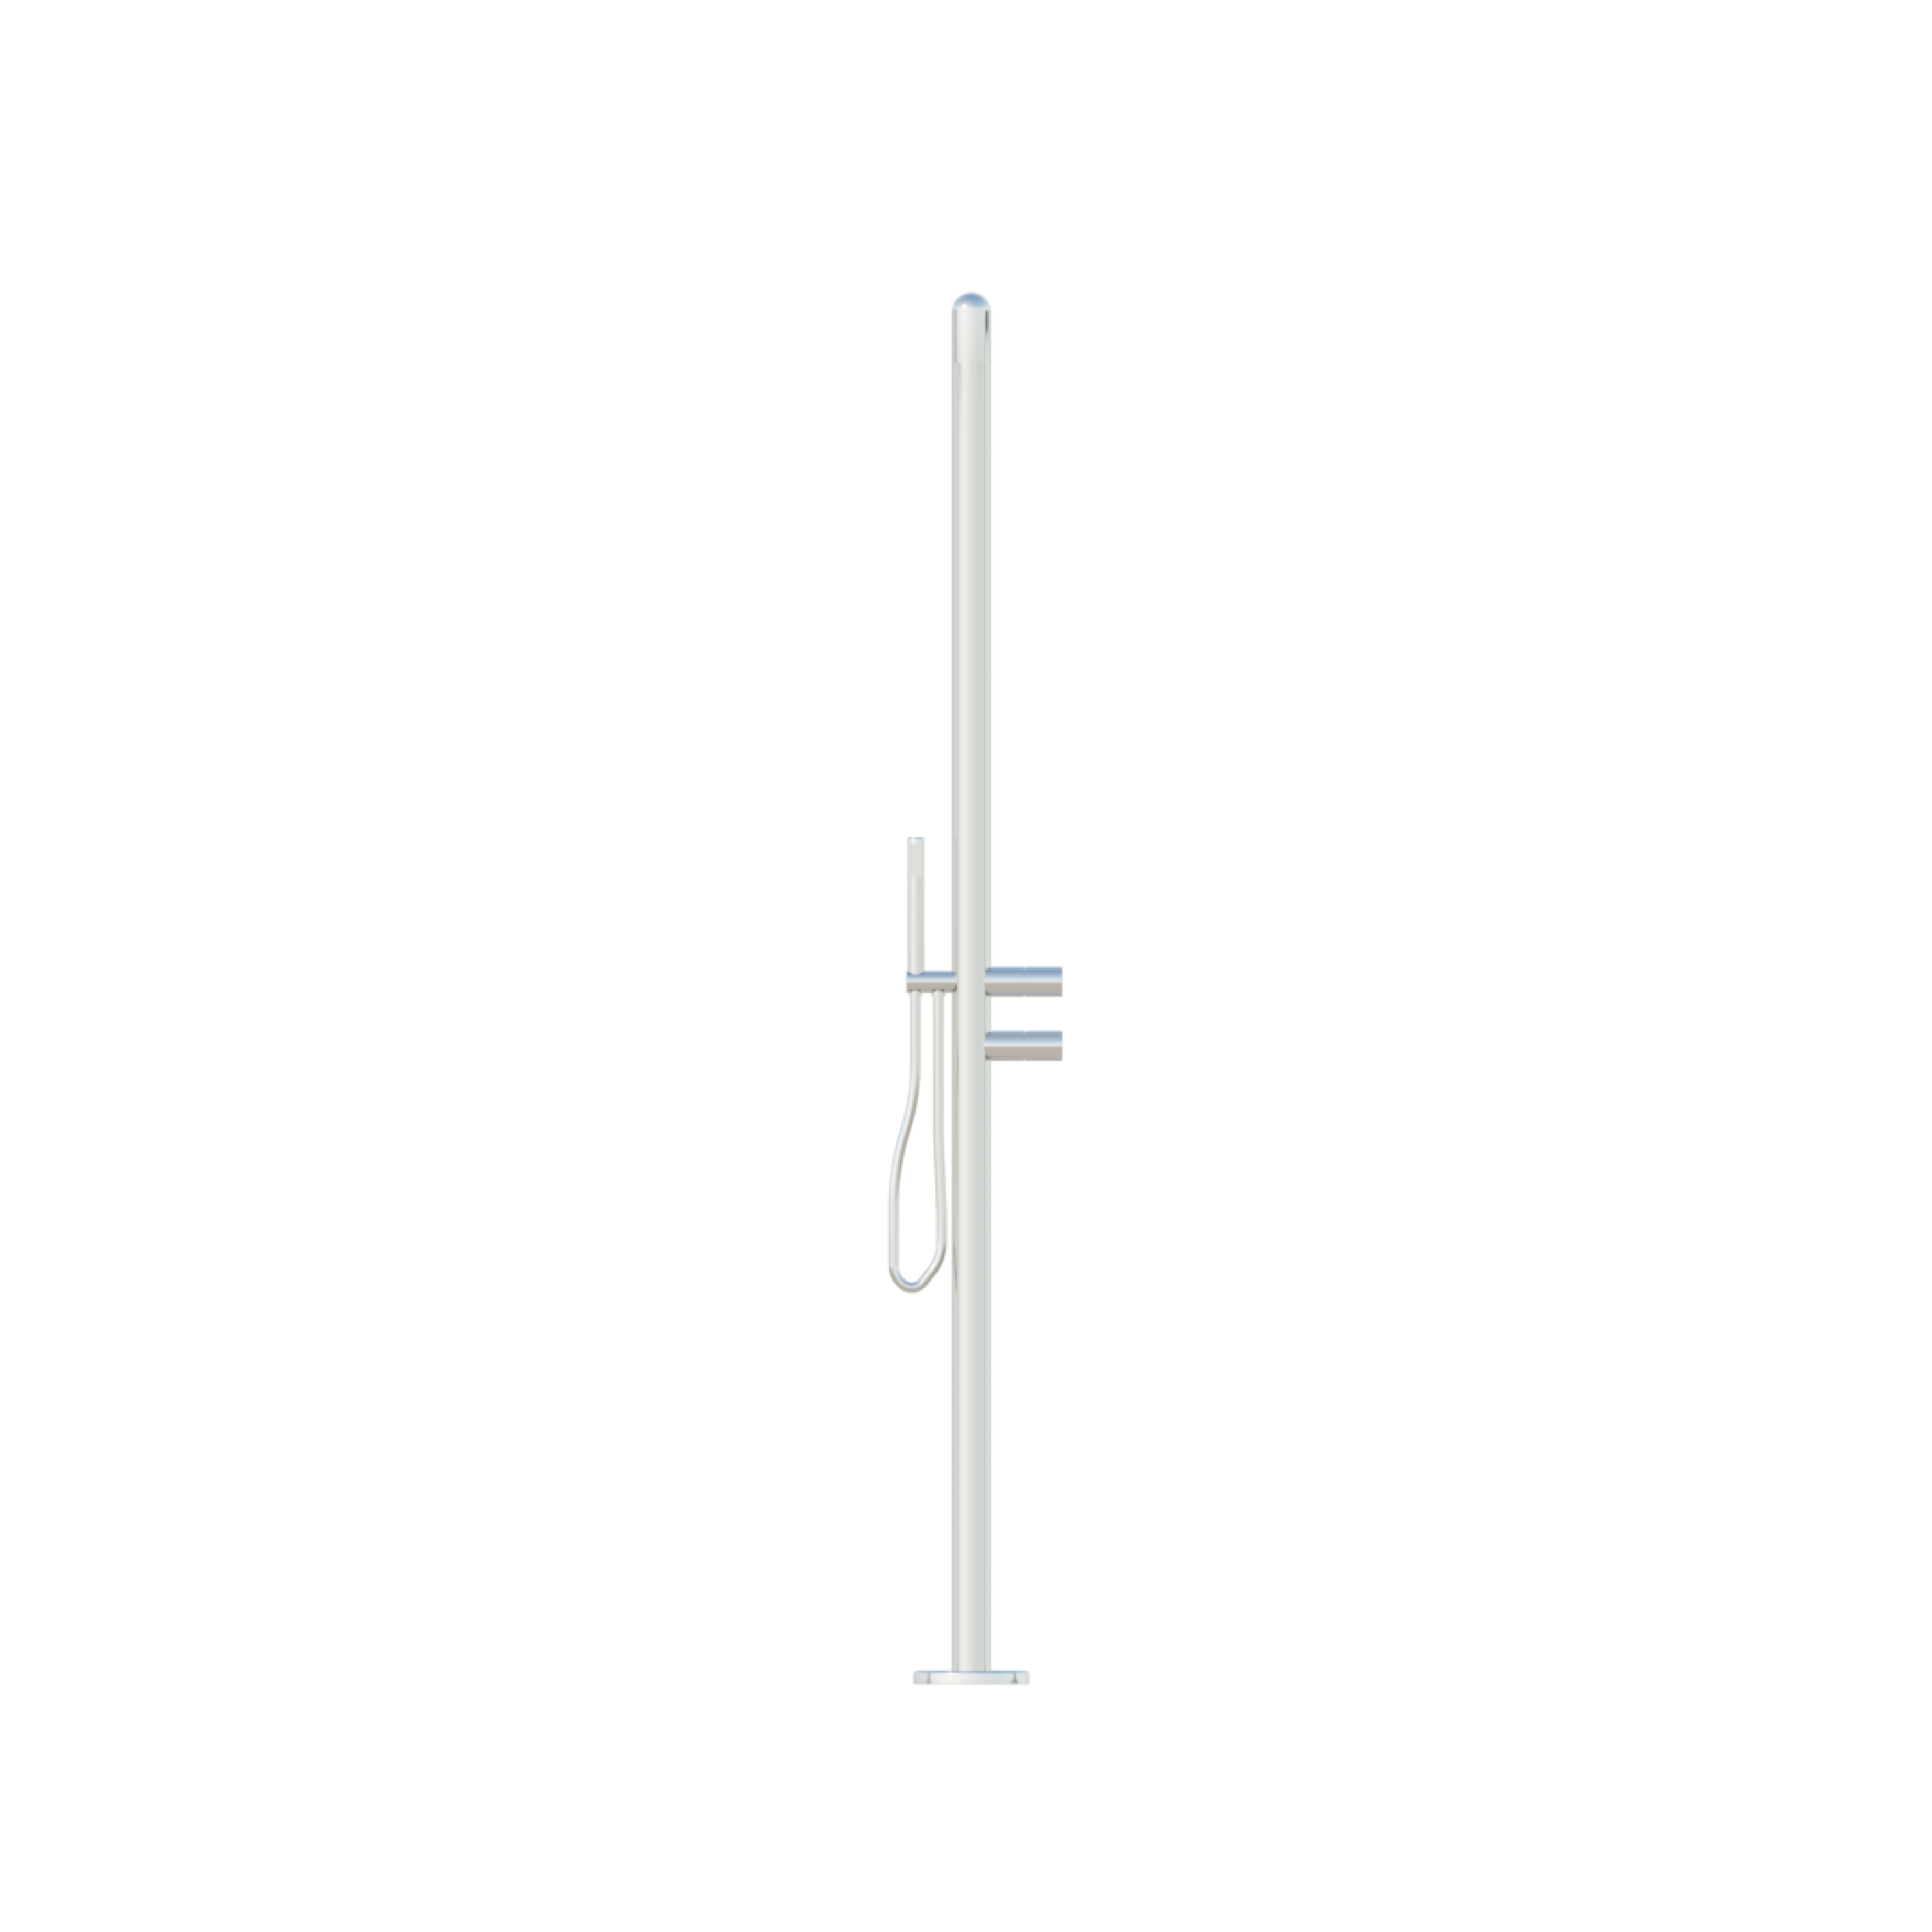 DAX Freestanding Outdoor Shower Stainless Steel with Hand Shower (DAX-807271)